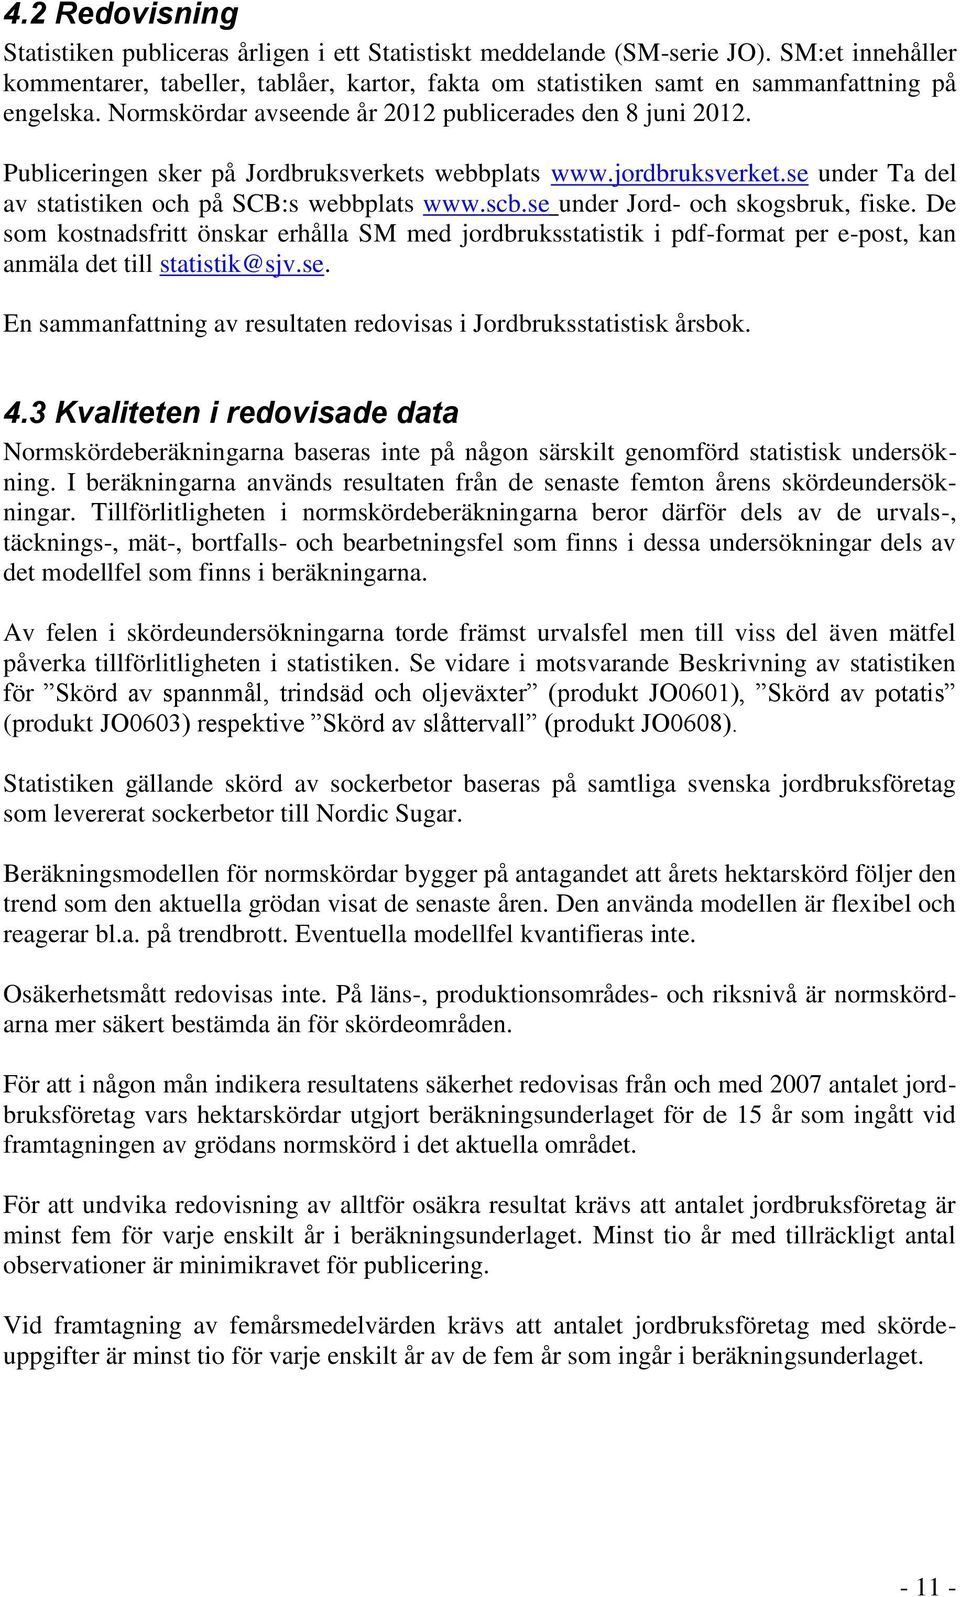 Publiceringen sker på Jordbruksverkets webbplats www.jordbruksverket.se under Ta del av statistiken och på SCB:s webbplats www.scb.se under Jord- och skogsbruk, fiske.